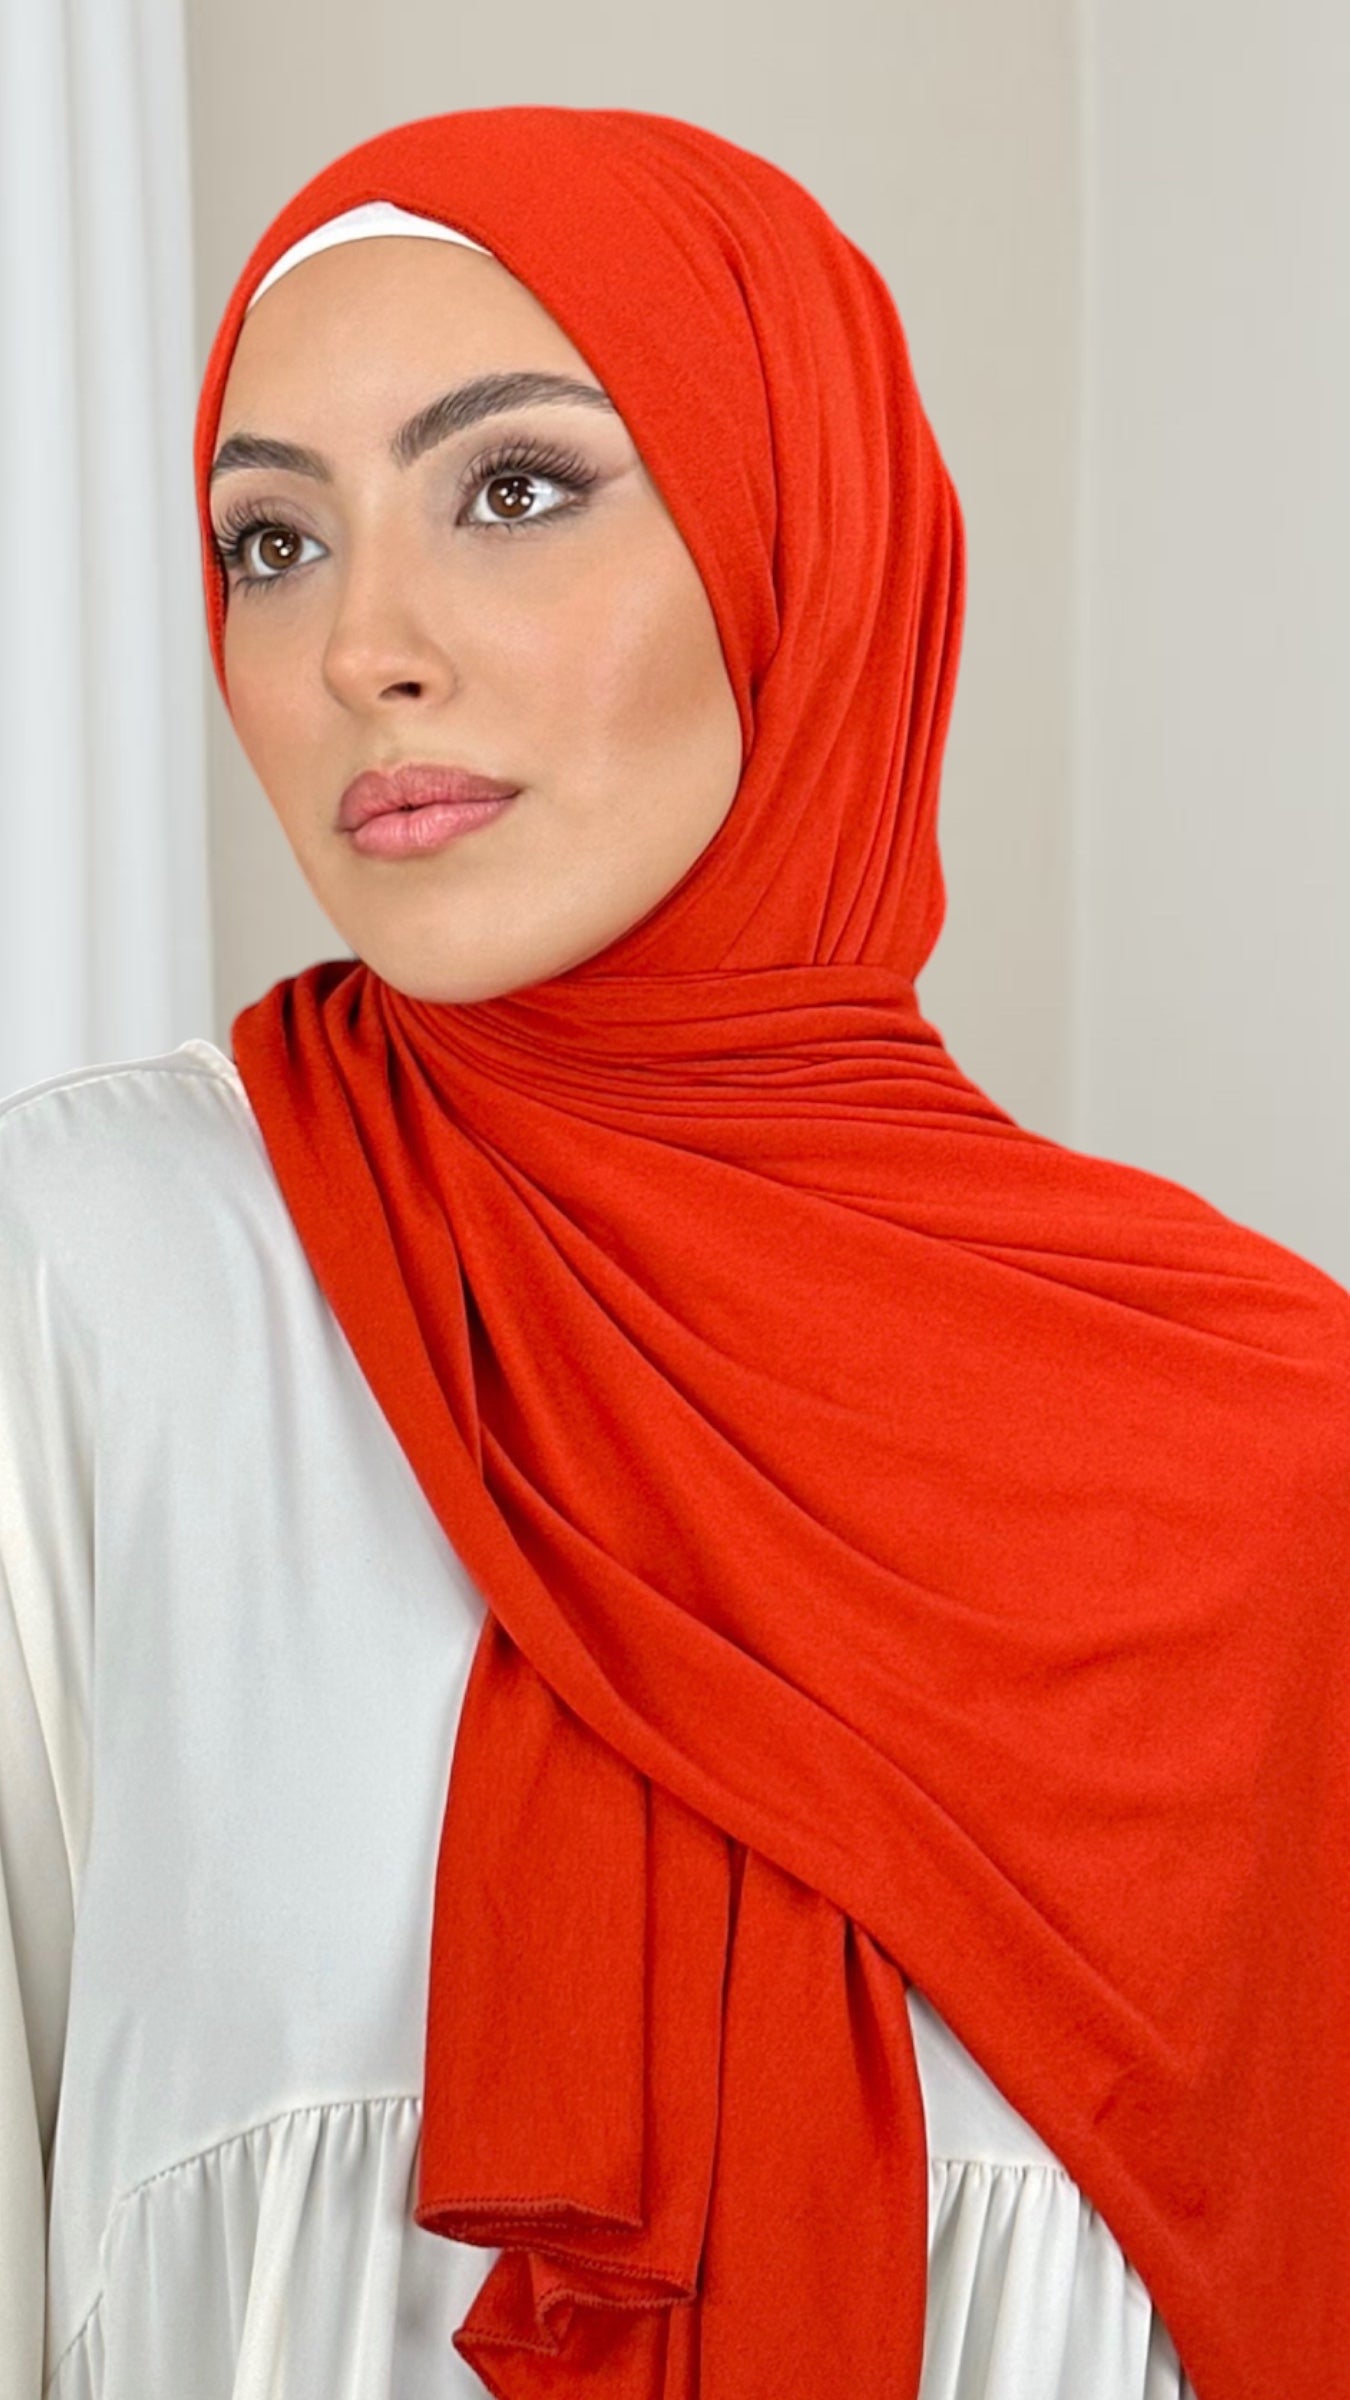 Hijab Jersey arancio rossastro-orlo FlatlockHijab, chador, velo, turbante, foulard, copricapo, musulmano, islamico, sciarpa, 